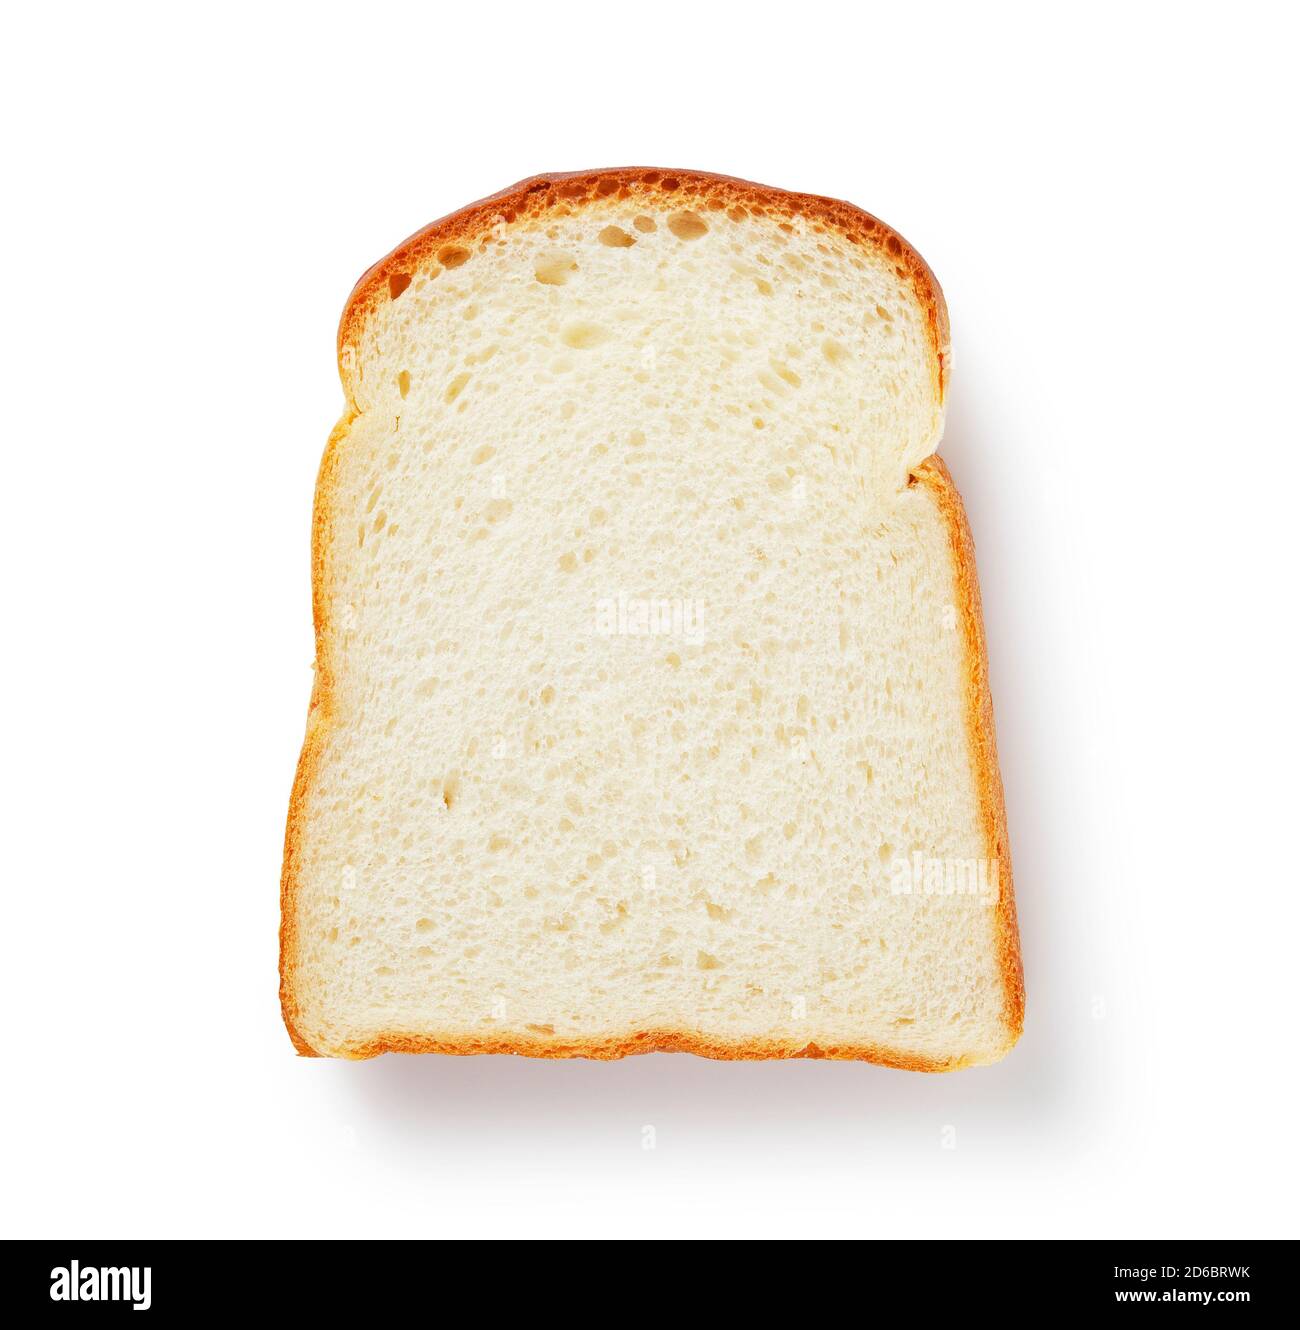 1 кусочек хлеба грамм. Кусочек белого хлеба. Кусок белого хлеба. Вес ломтика хлеба белого. 100 Гр белого хлеба.